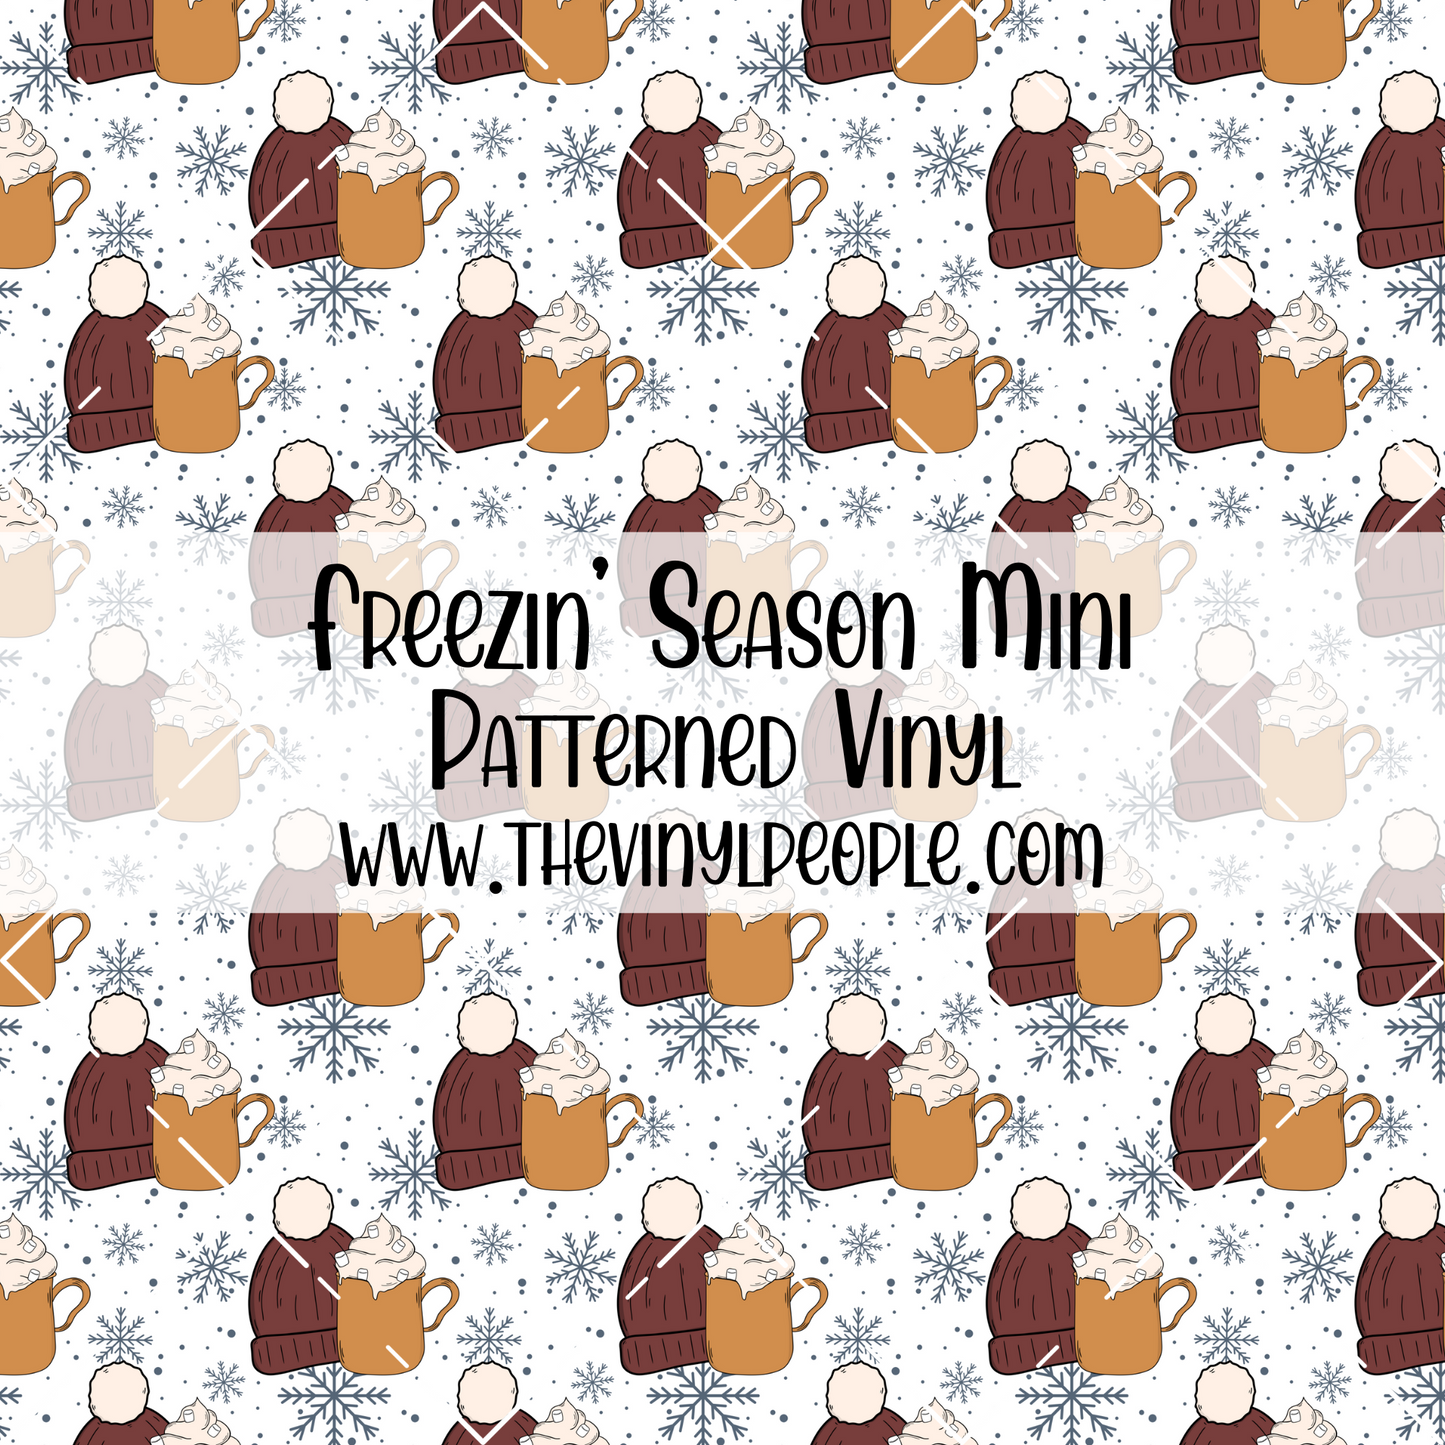 Freezin' Season Patterned Vinyl